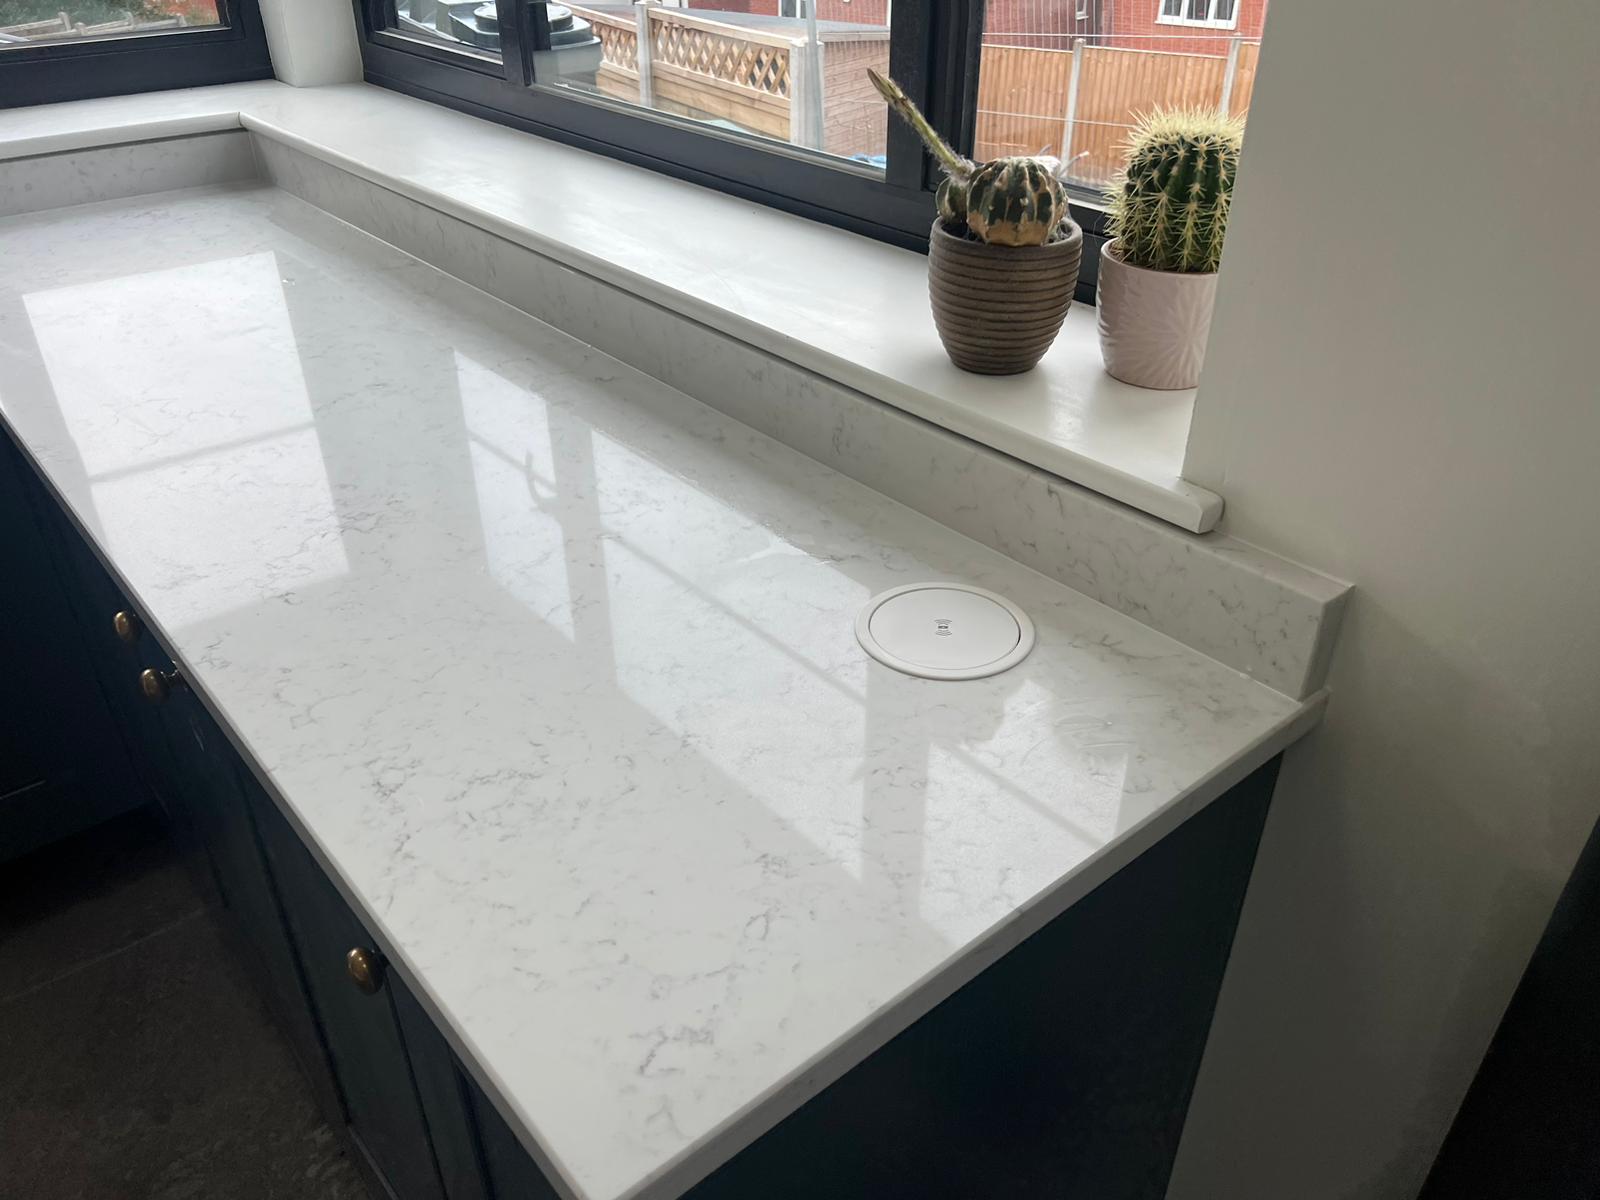 Carrara White quartz kitchen worktop with a soft white hue and smoky grey veins.